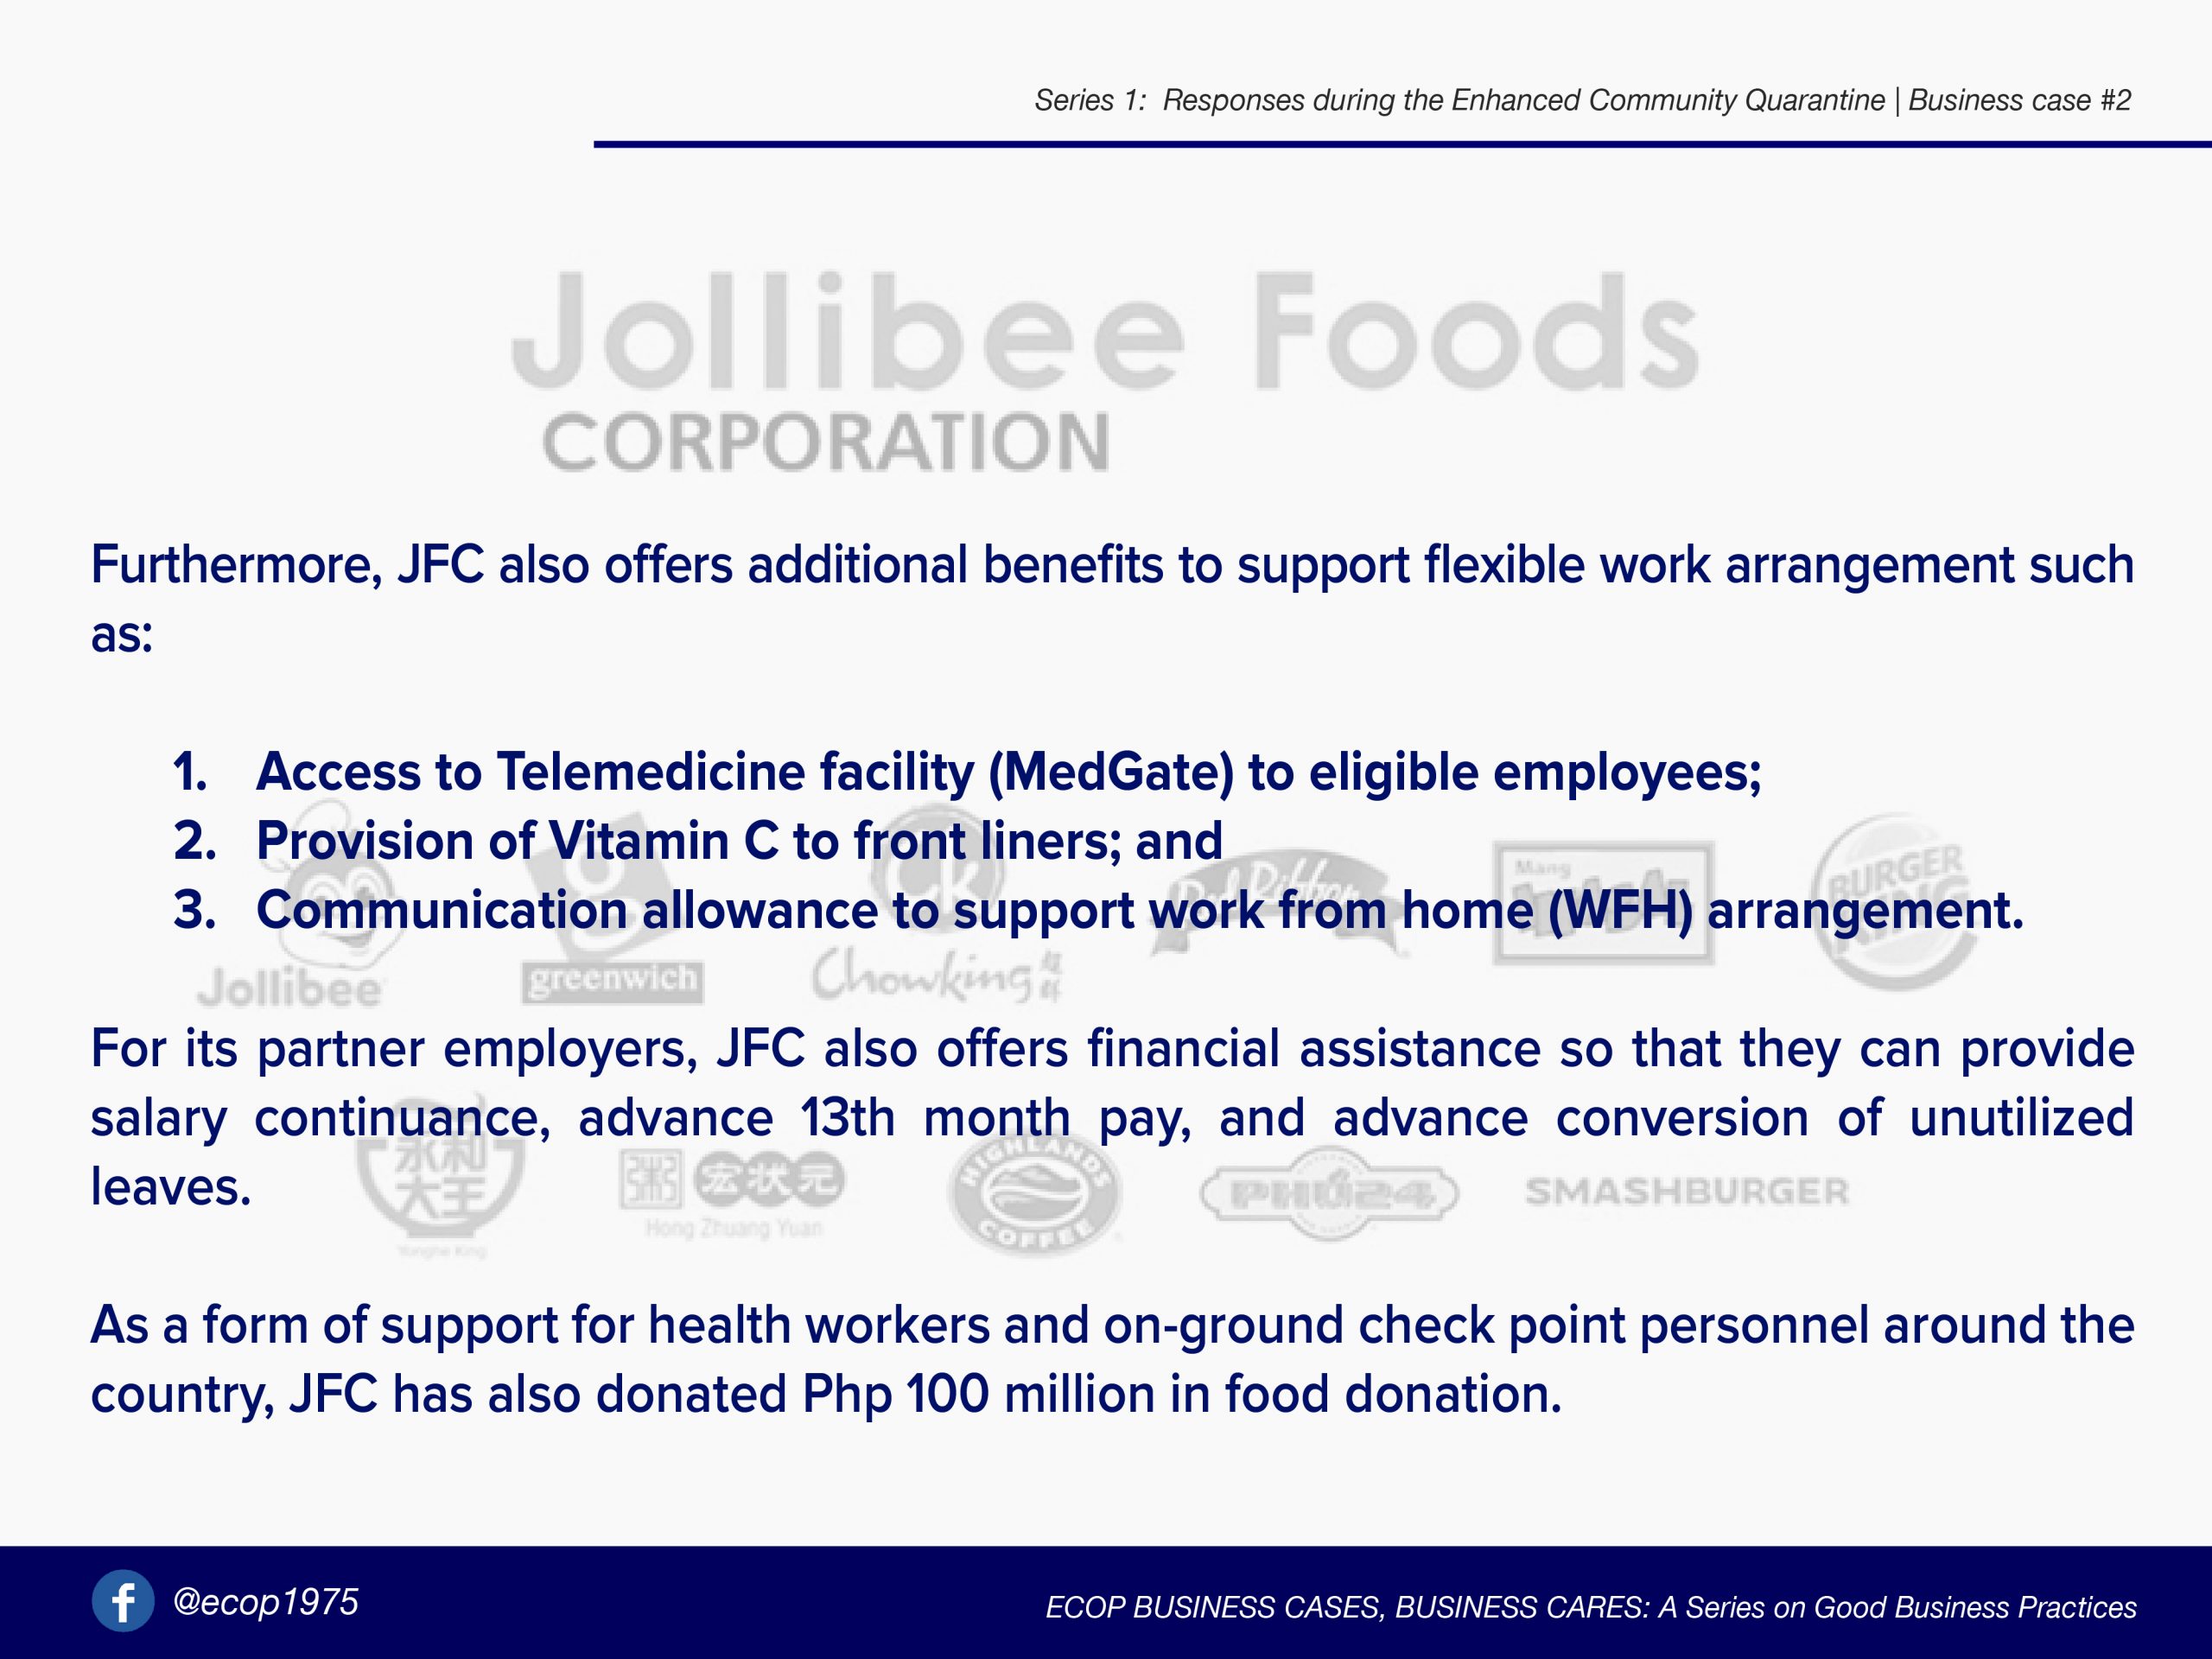 02-Jollibee foods corporation amid the COVID-19 crisis